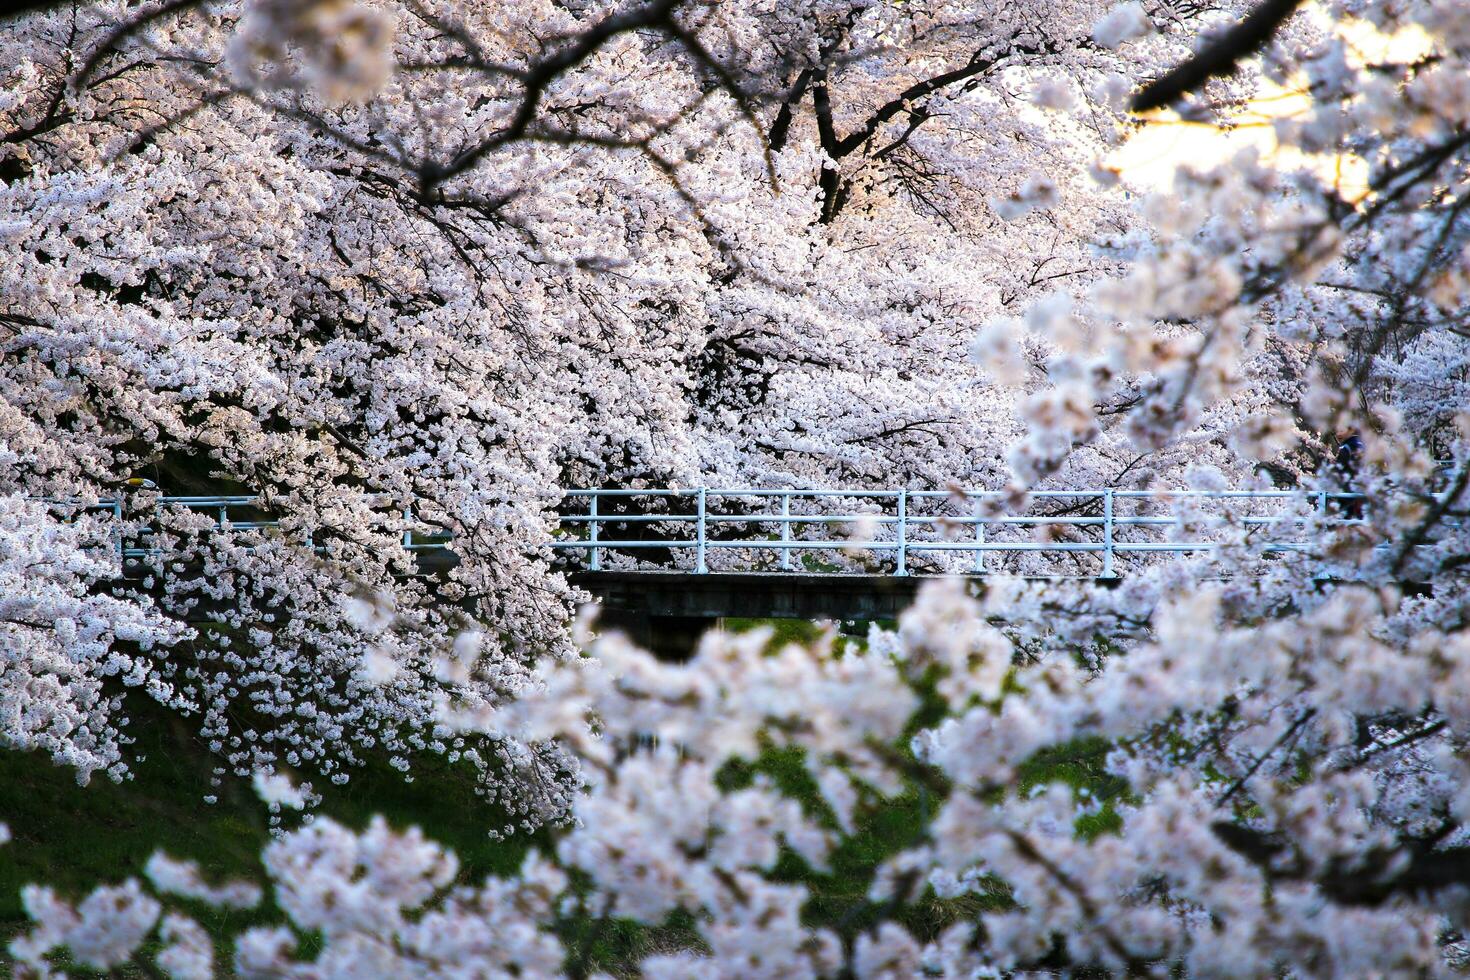 Beautiful cherry blossoms. sakura flowers in japan. Travel spring time. photo